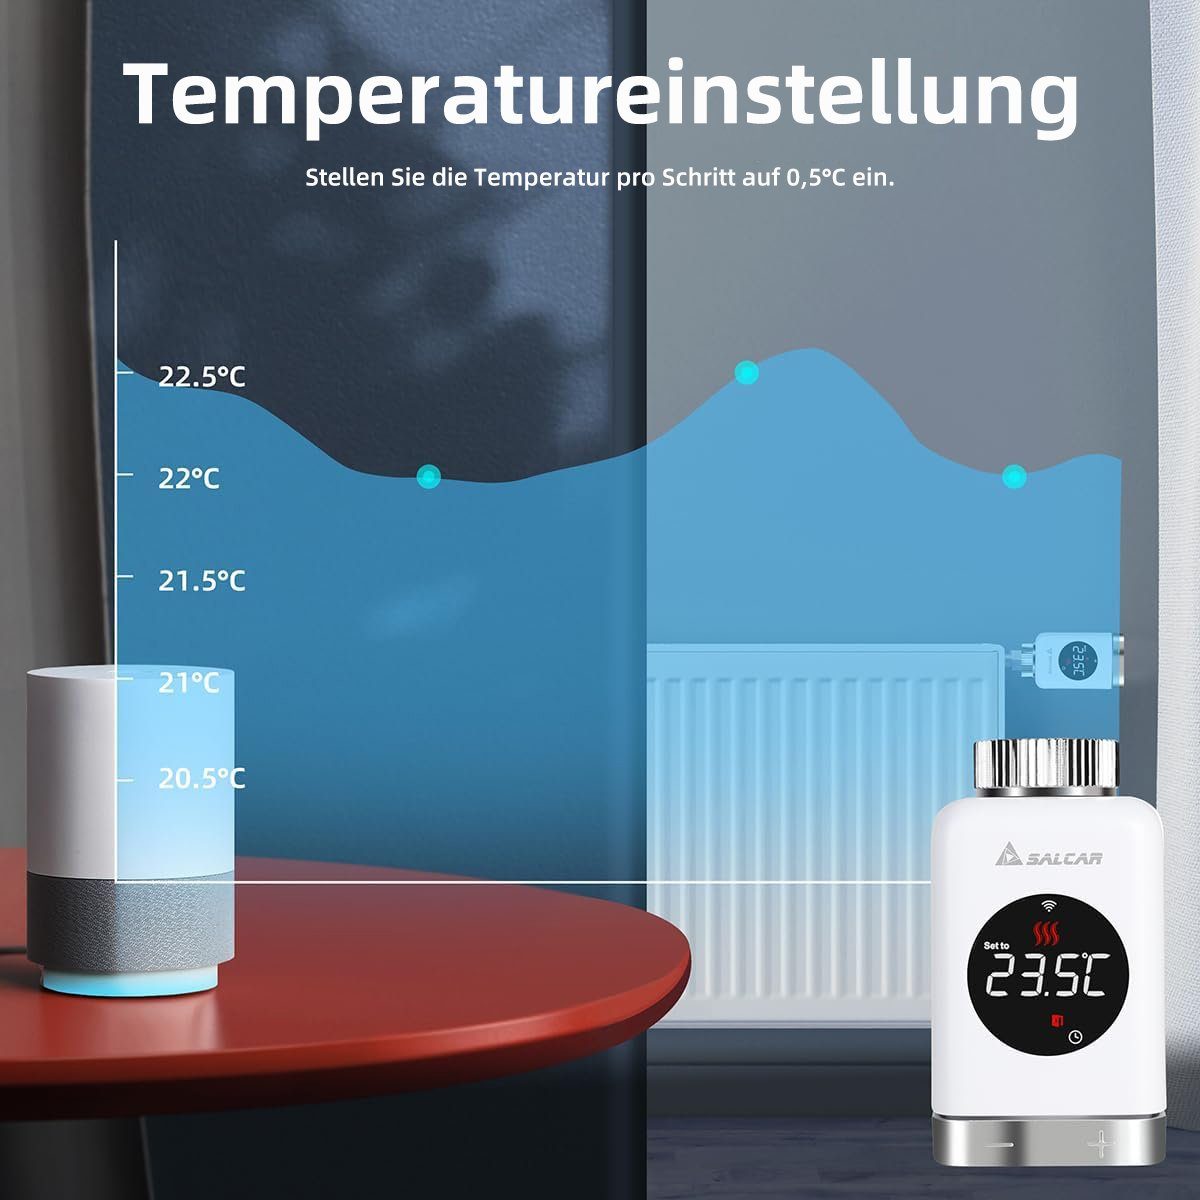 kompatibel Amazon mit Thermostat Smart Alexa LCD Heizkörperthermostat Assistant Salcar Heizung Google Thermostat TRV801W WiFi, & Heizkörperthermostat